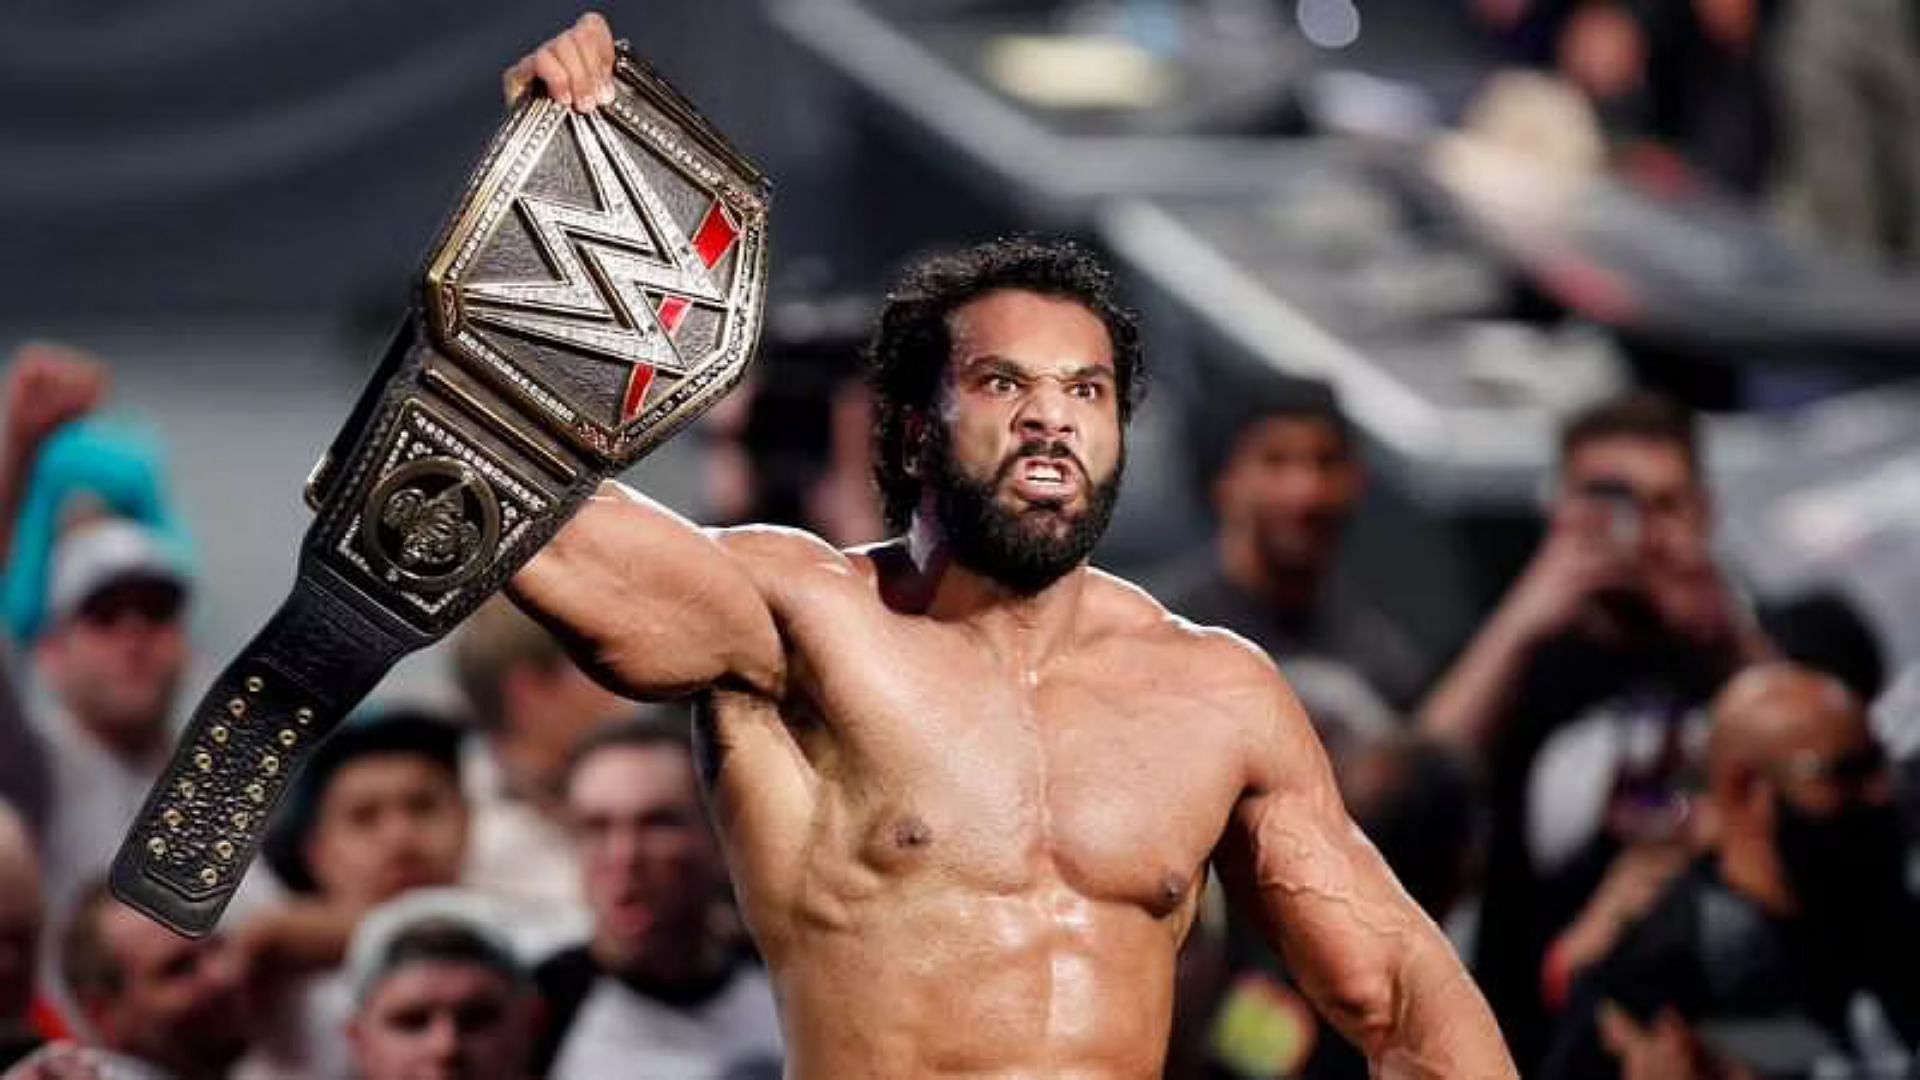 Jinder Mahal is a former WWE World Champion